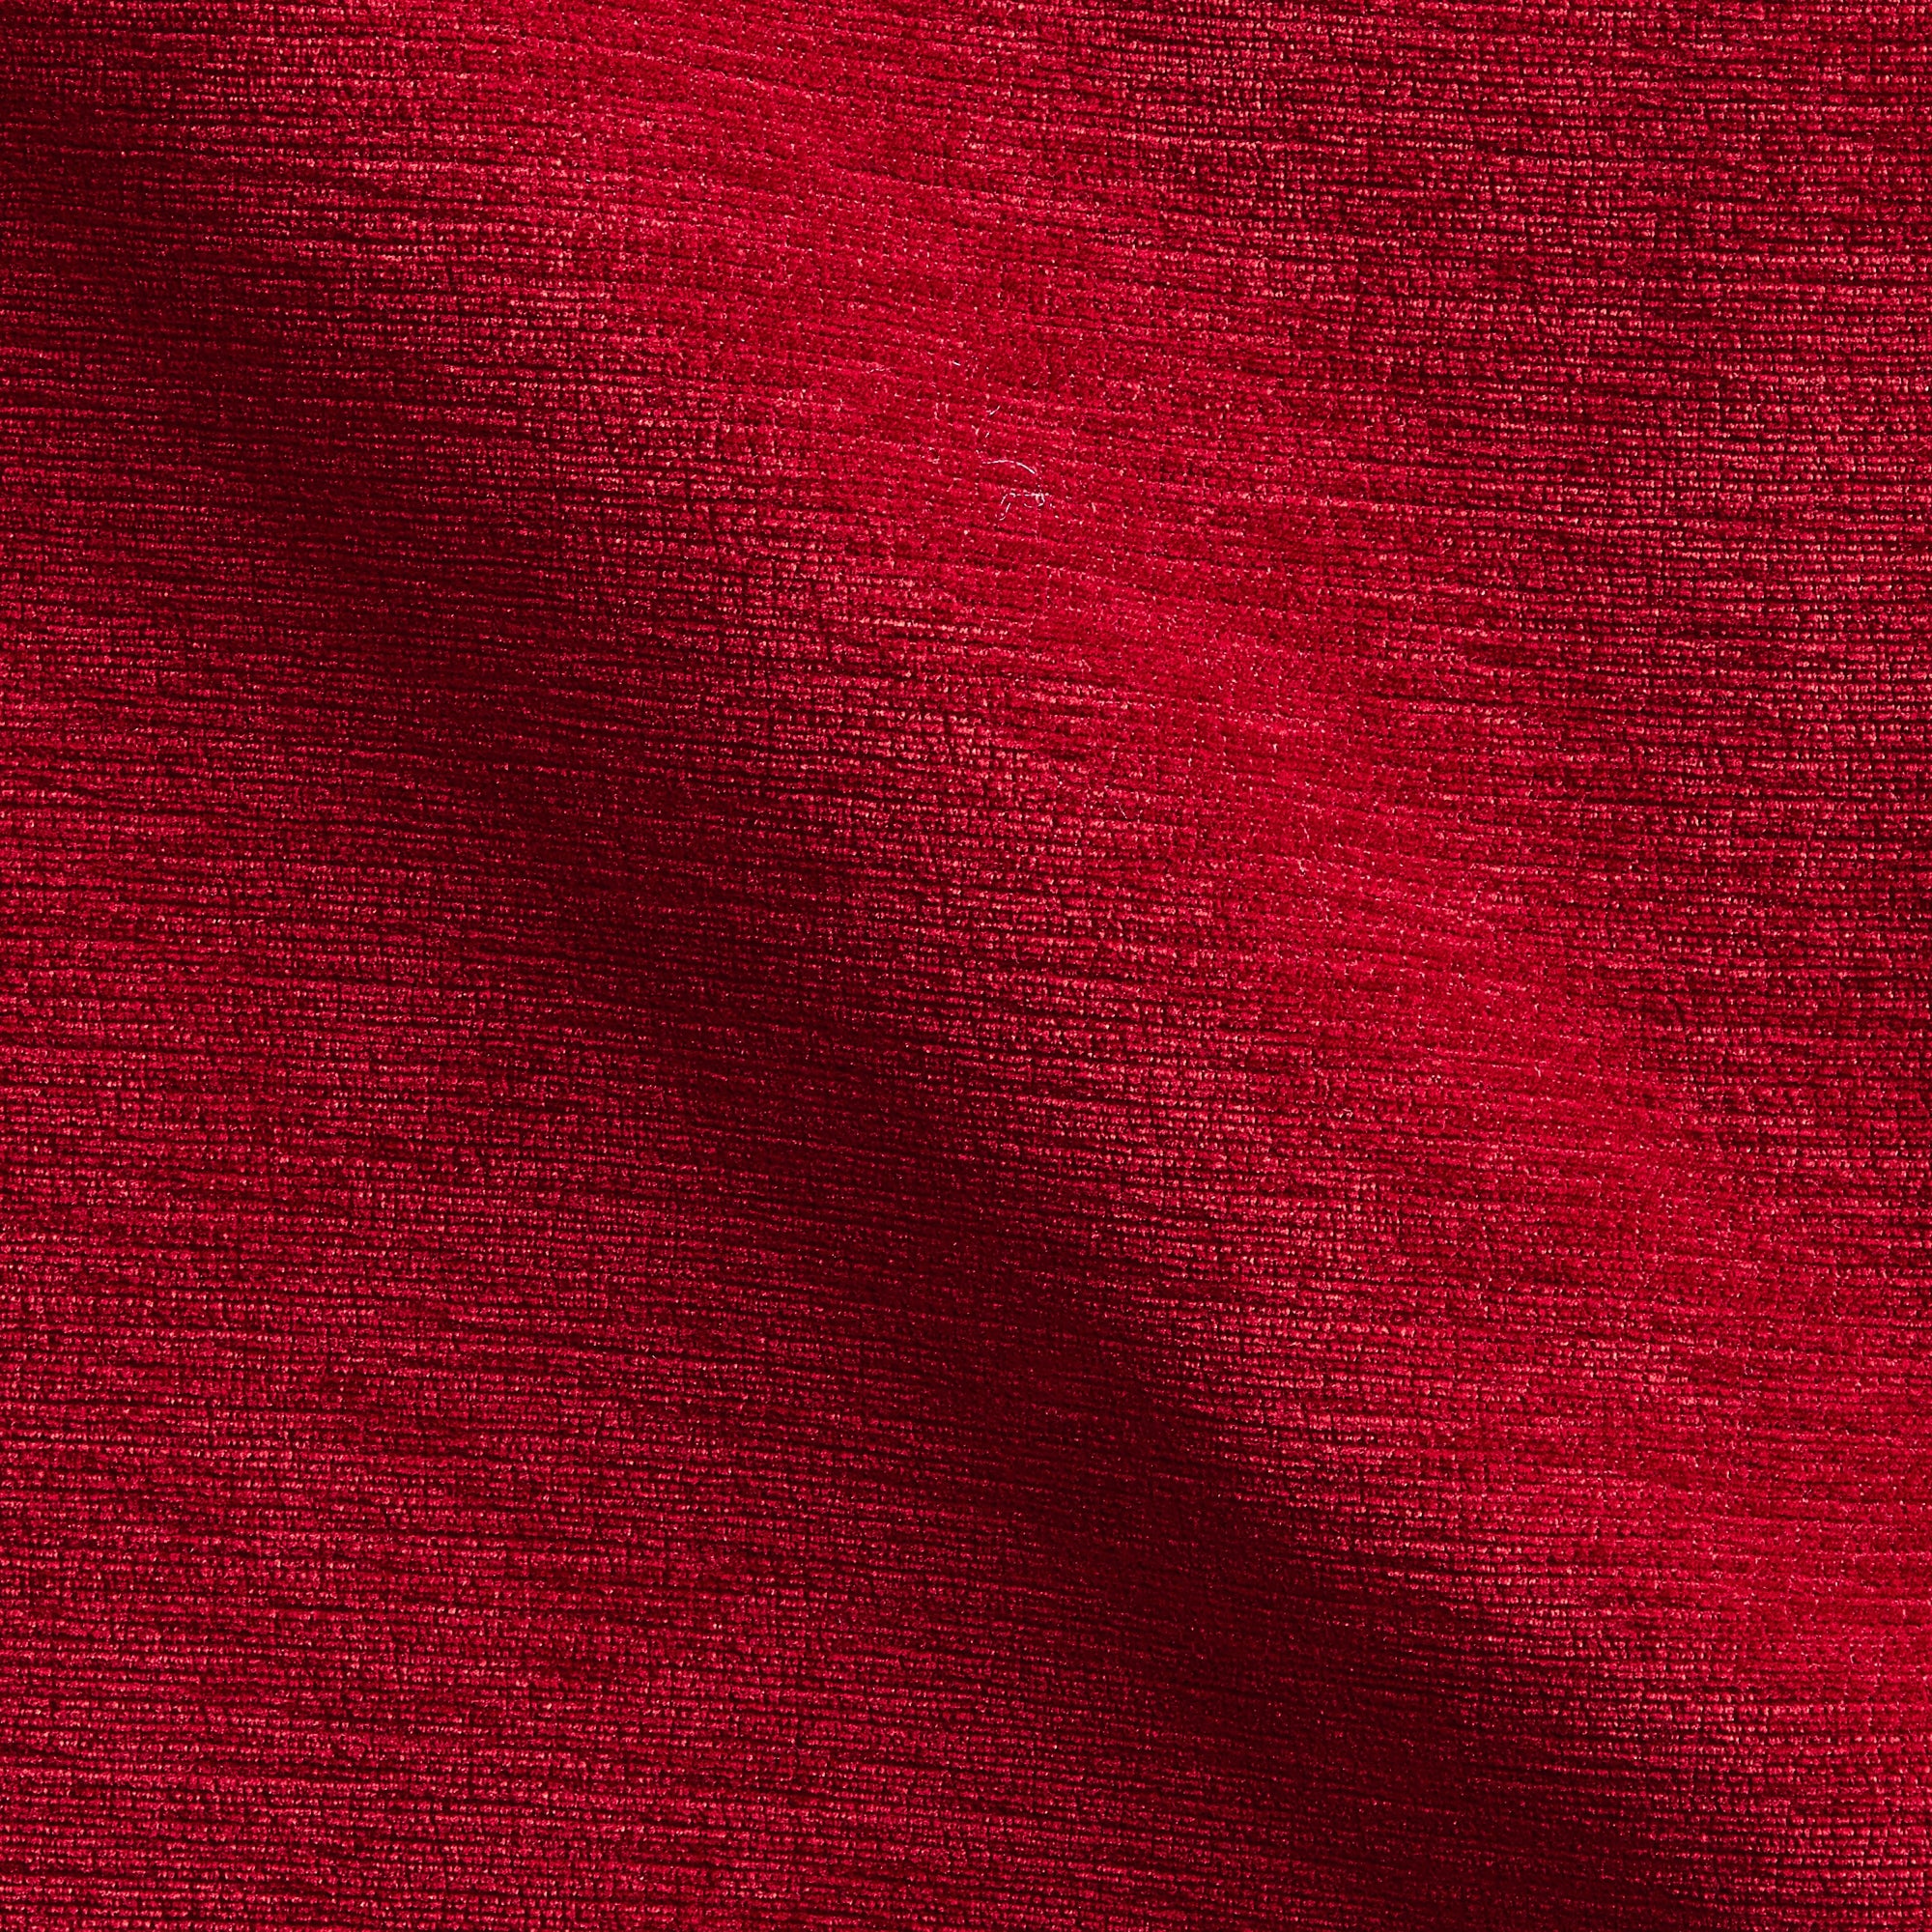 Kensington Made to Measure Curtains Kensington Red